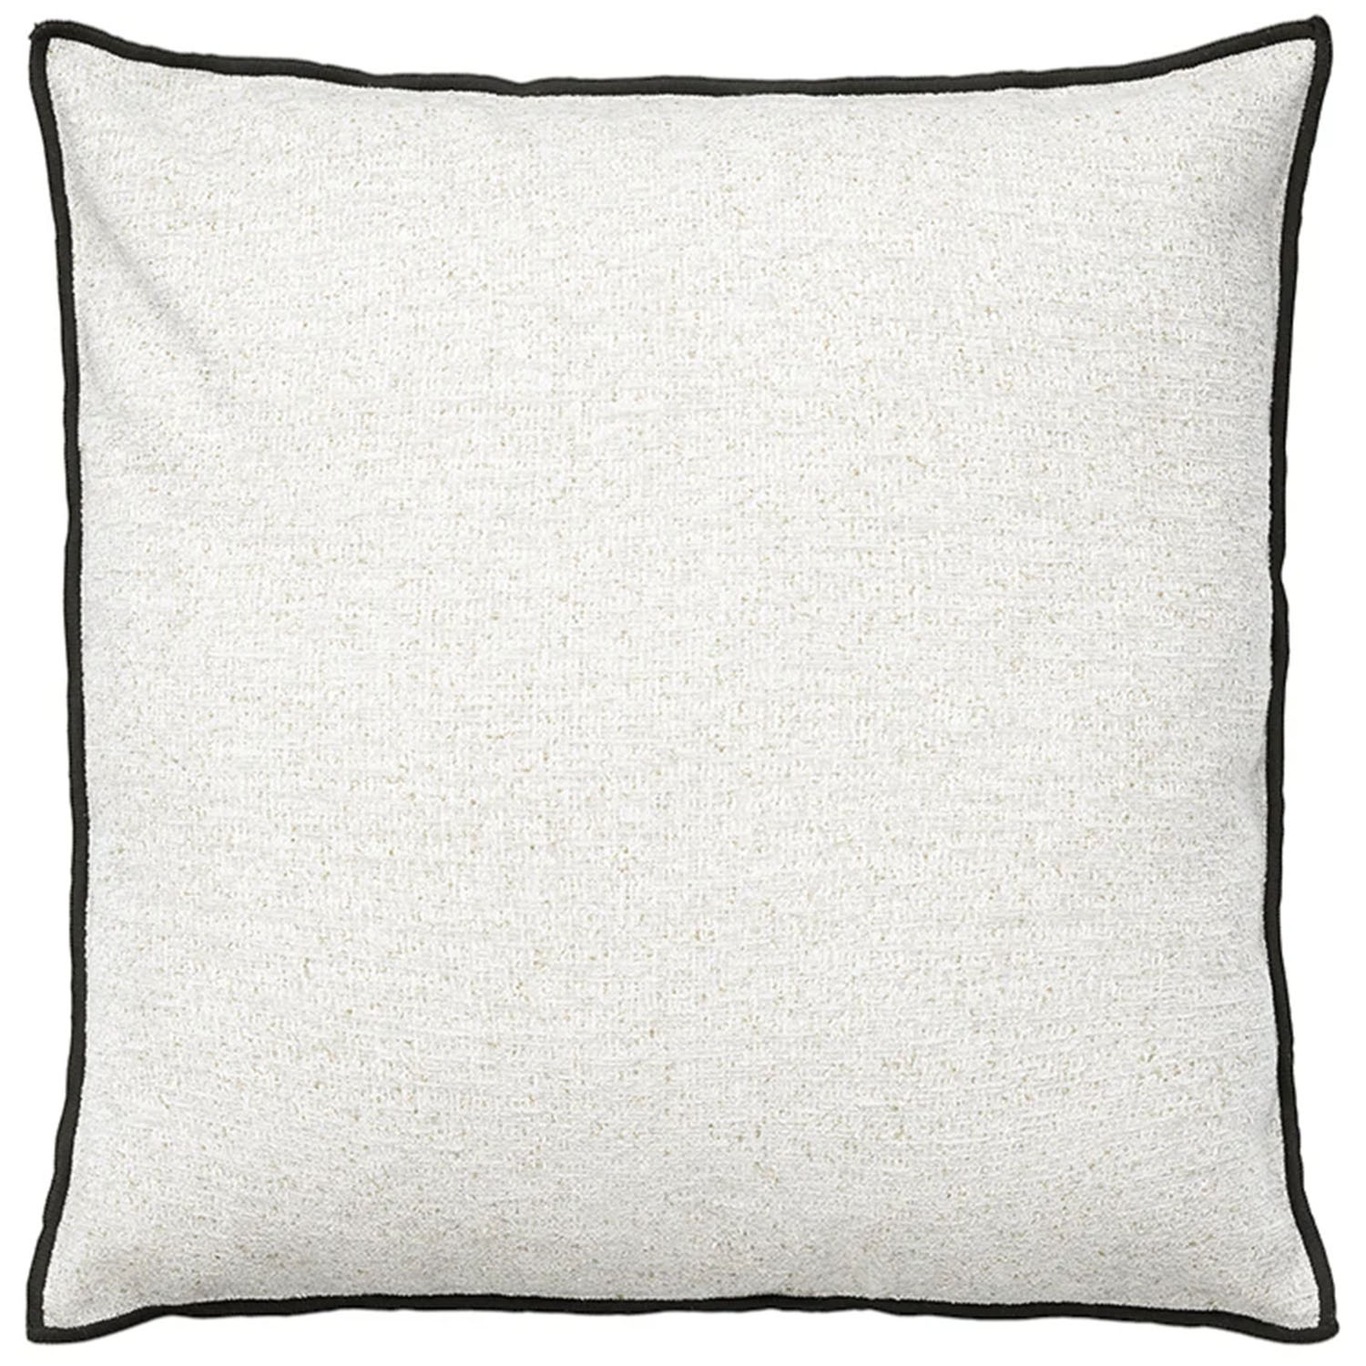 https://royaldesign.com/image/2/blomus-chenille-cushion-cover-45-x-45-cm-moonbeam-1?w=800&quality=80